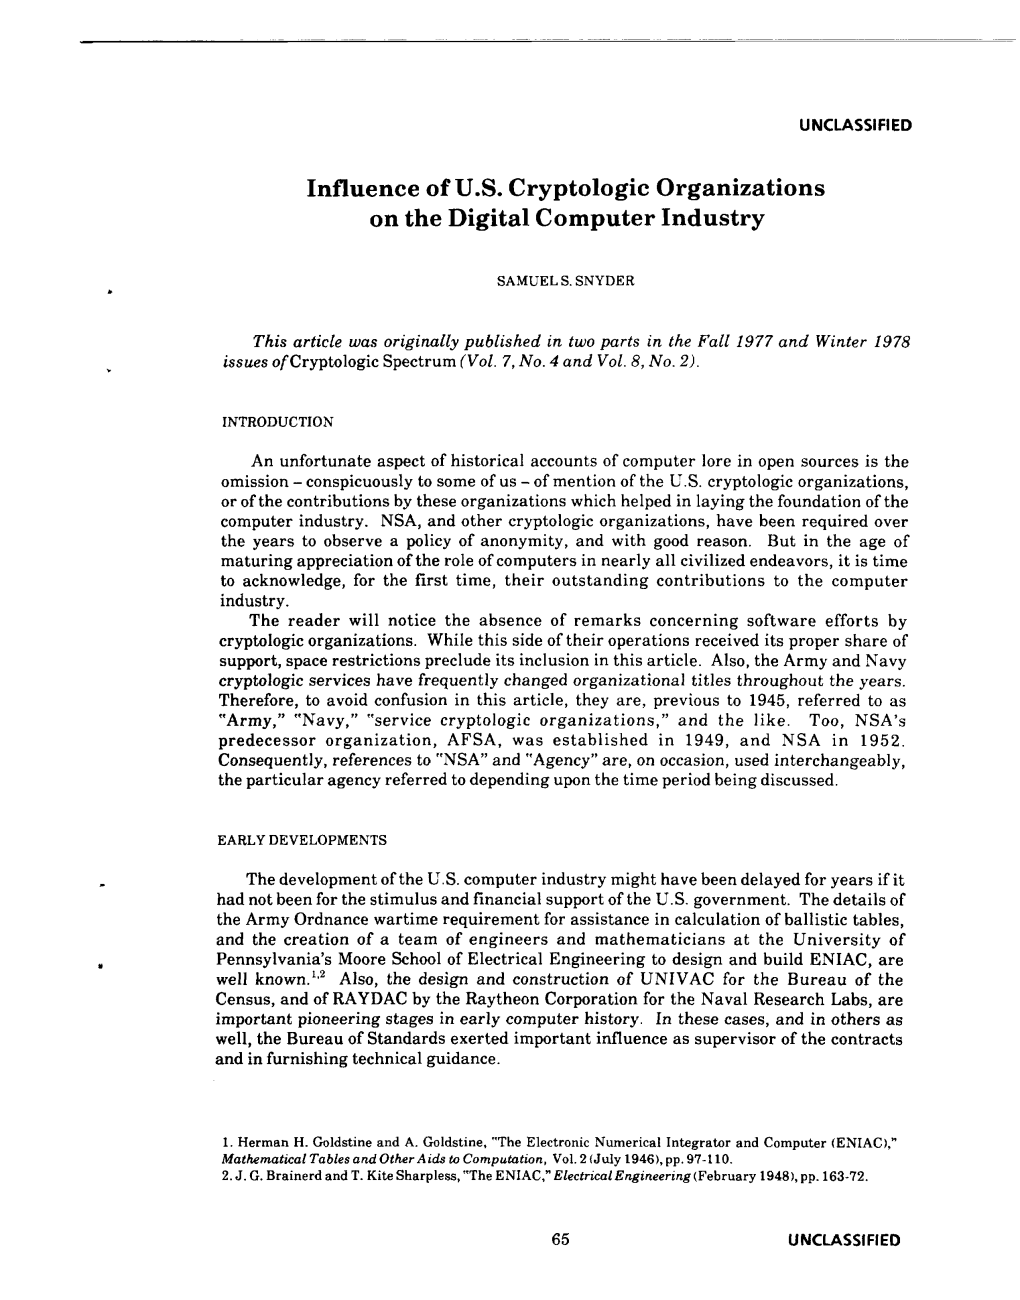 Influence of U.S. Cryptologic Organizations on the Digital Computer Industry